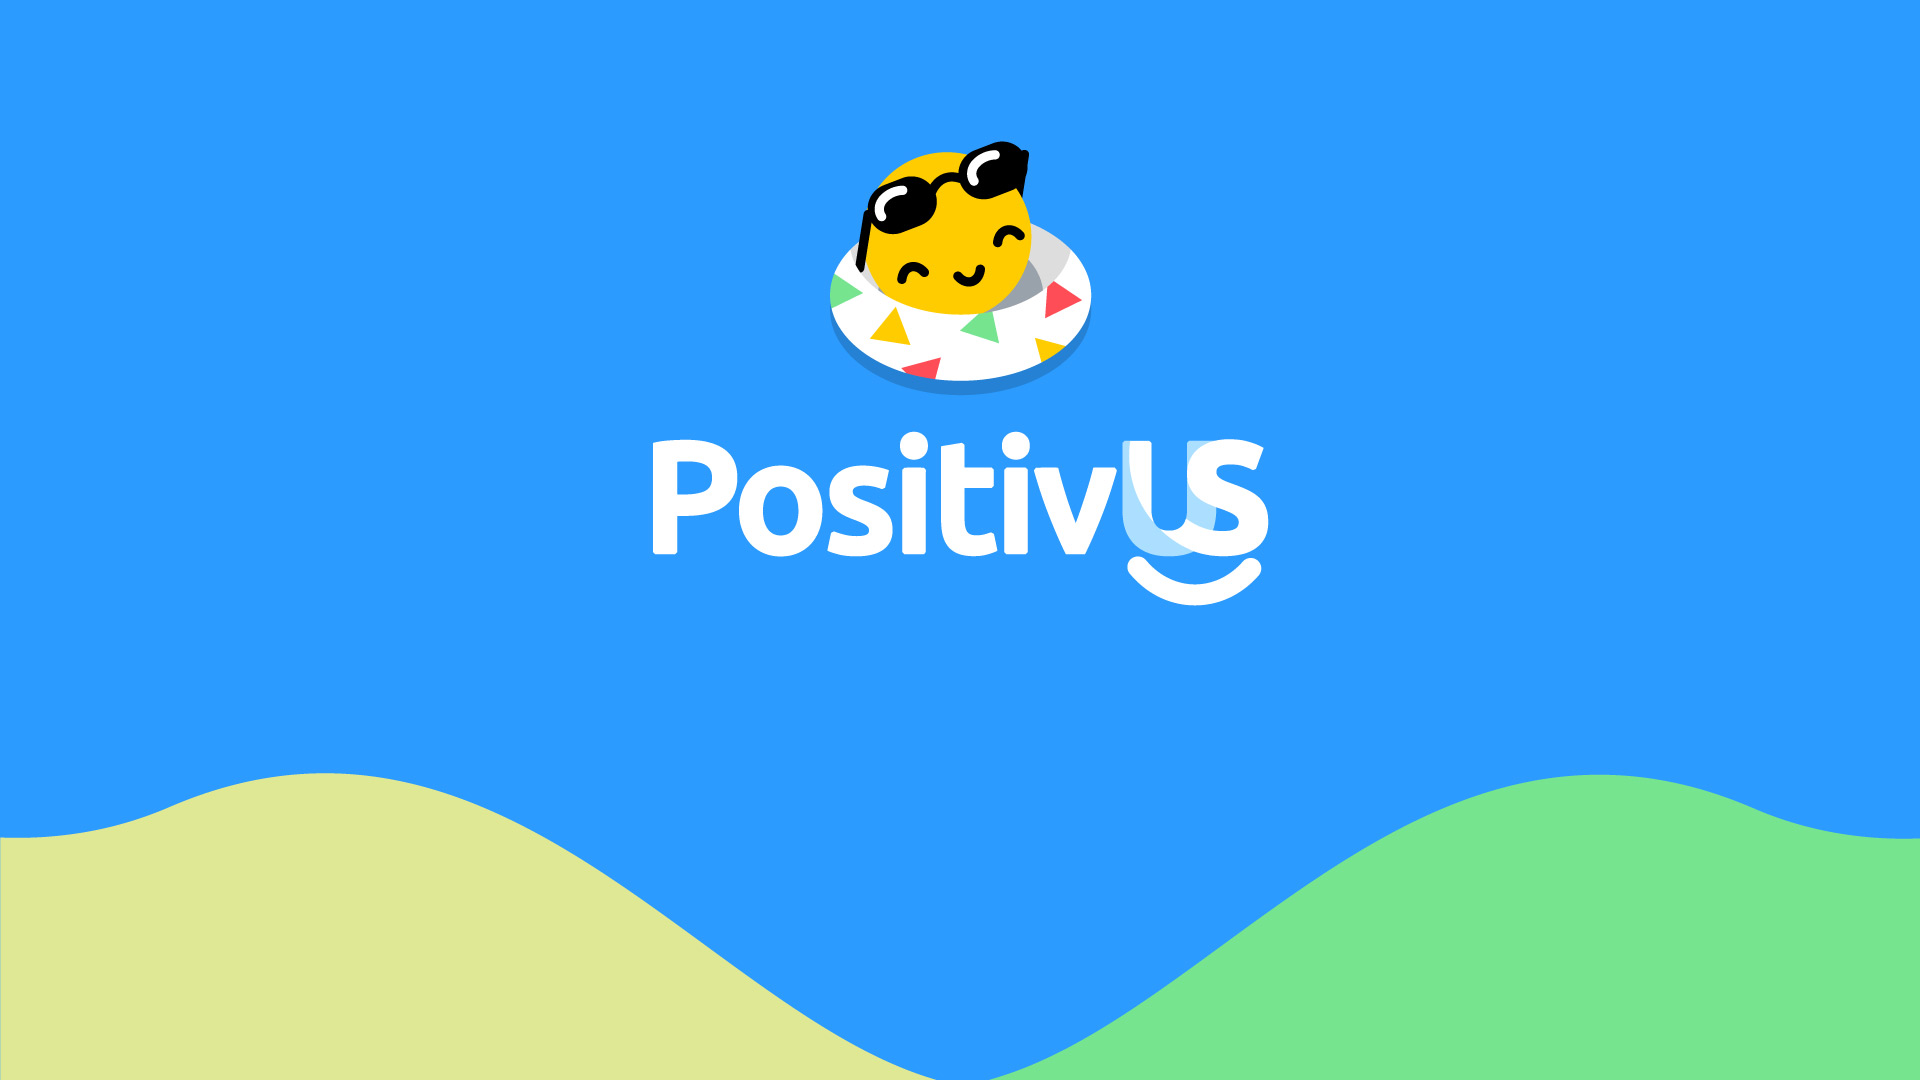 Restylling logotipo Positivus